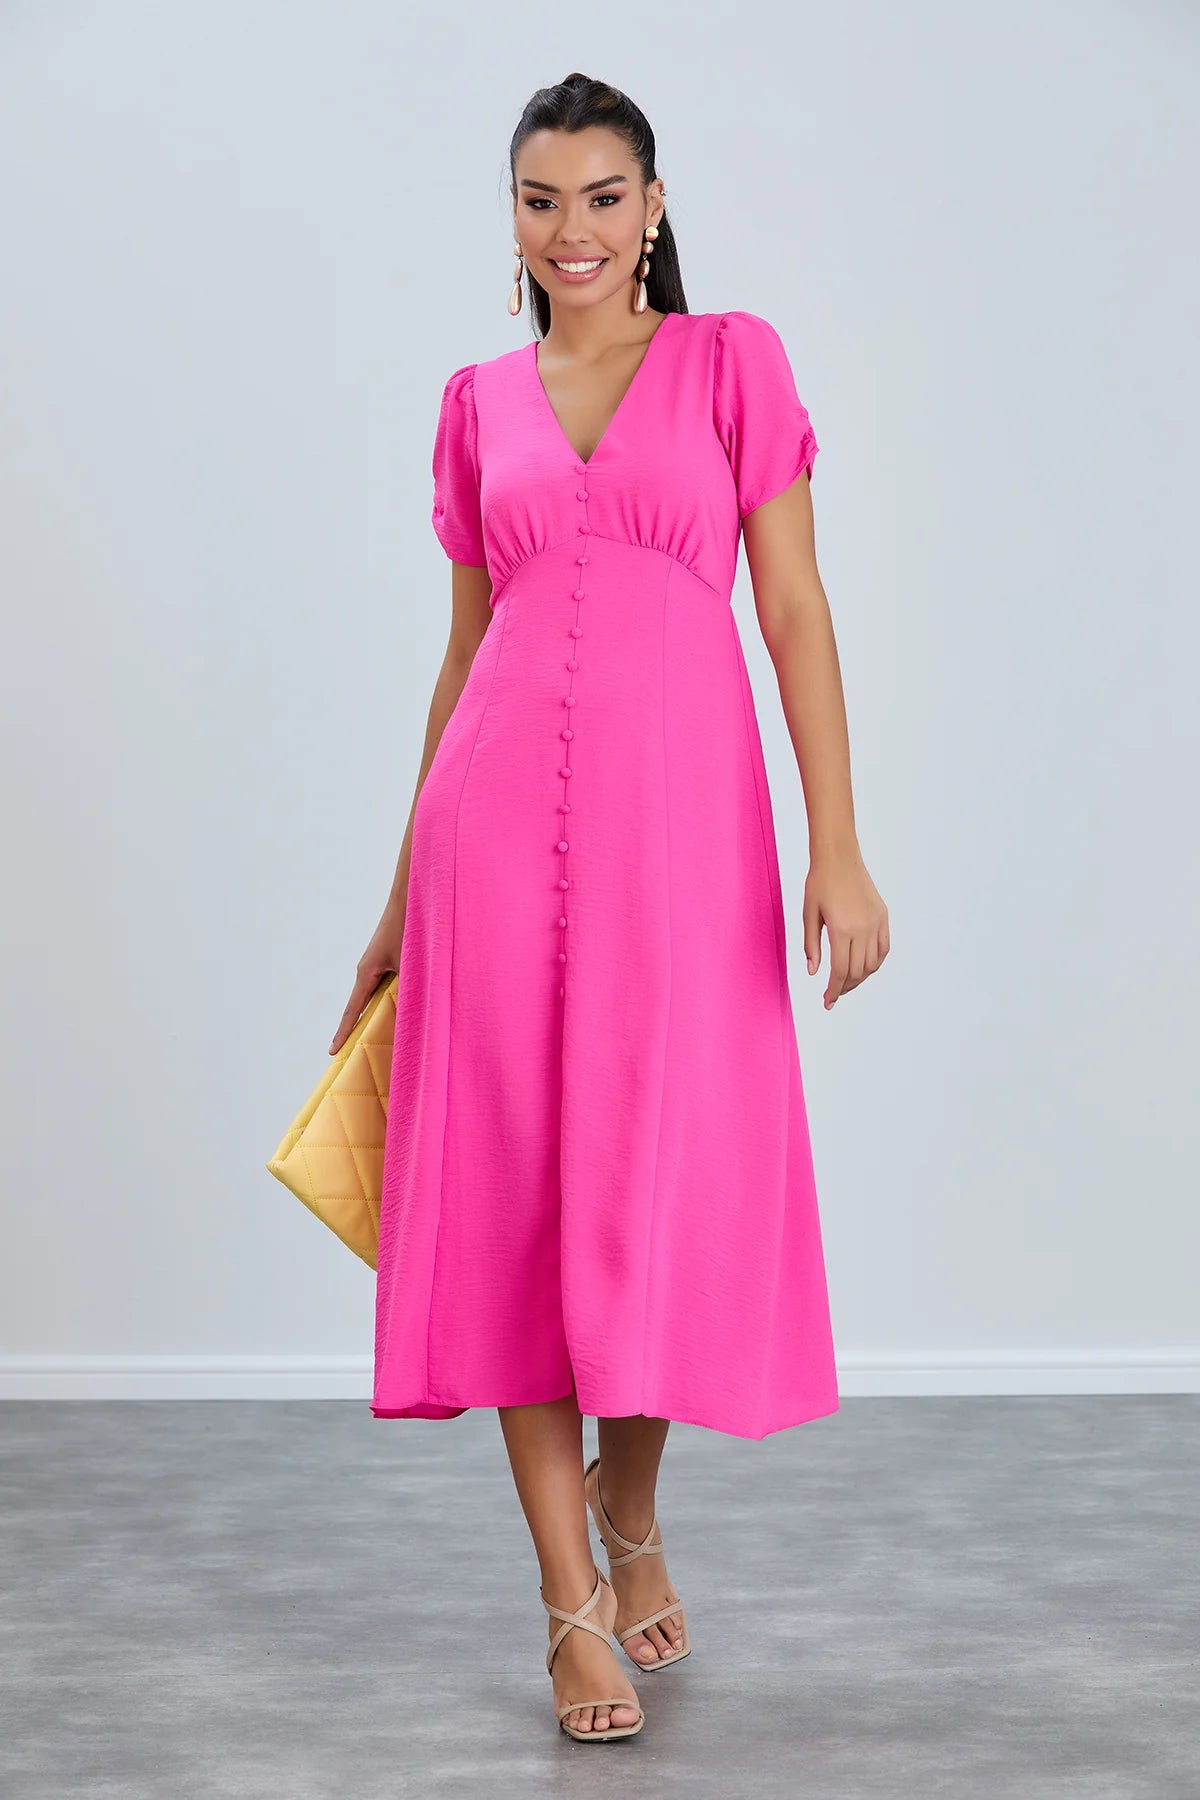 jenerique-bright-pink-midi-dress